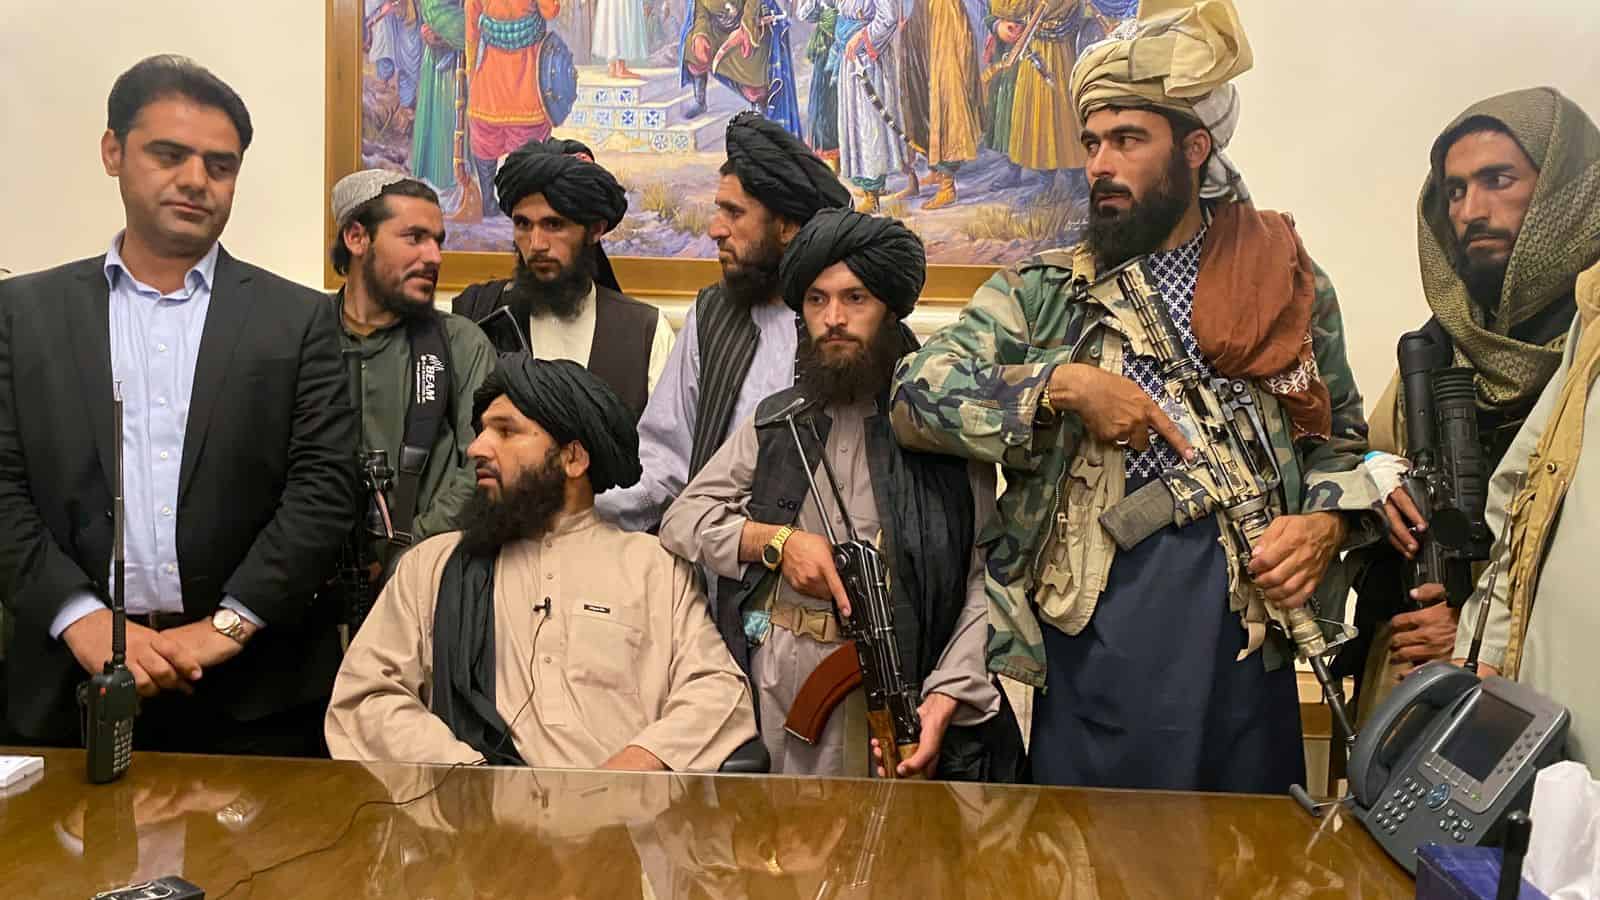 Главни руски безбедњак упозорава: Авганистану прети катастрофа ако се ситуација не стабилизује